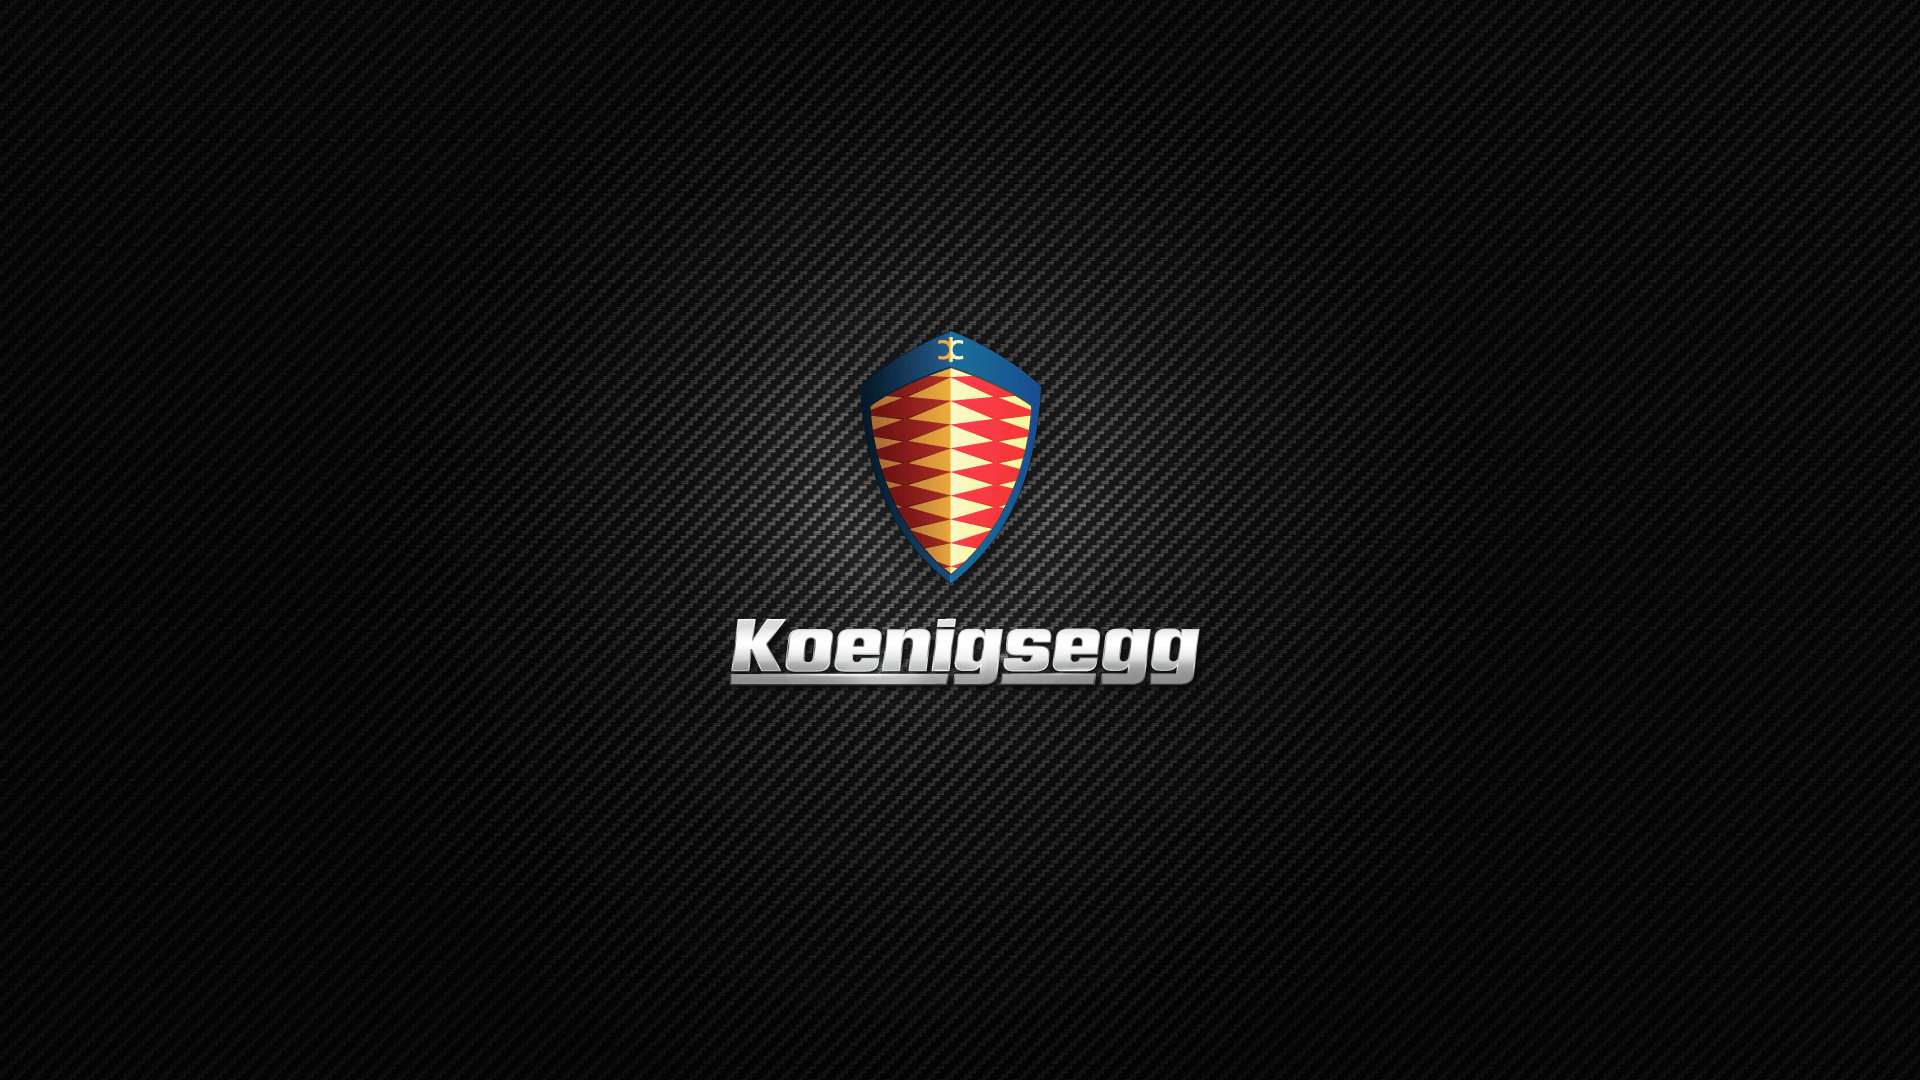 Koenigsegg Logo Wallpaper HD 41876 1920x1080 px